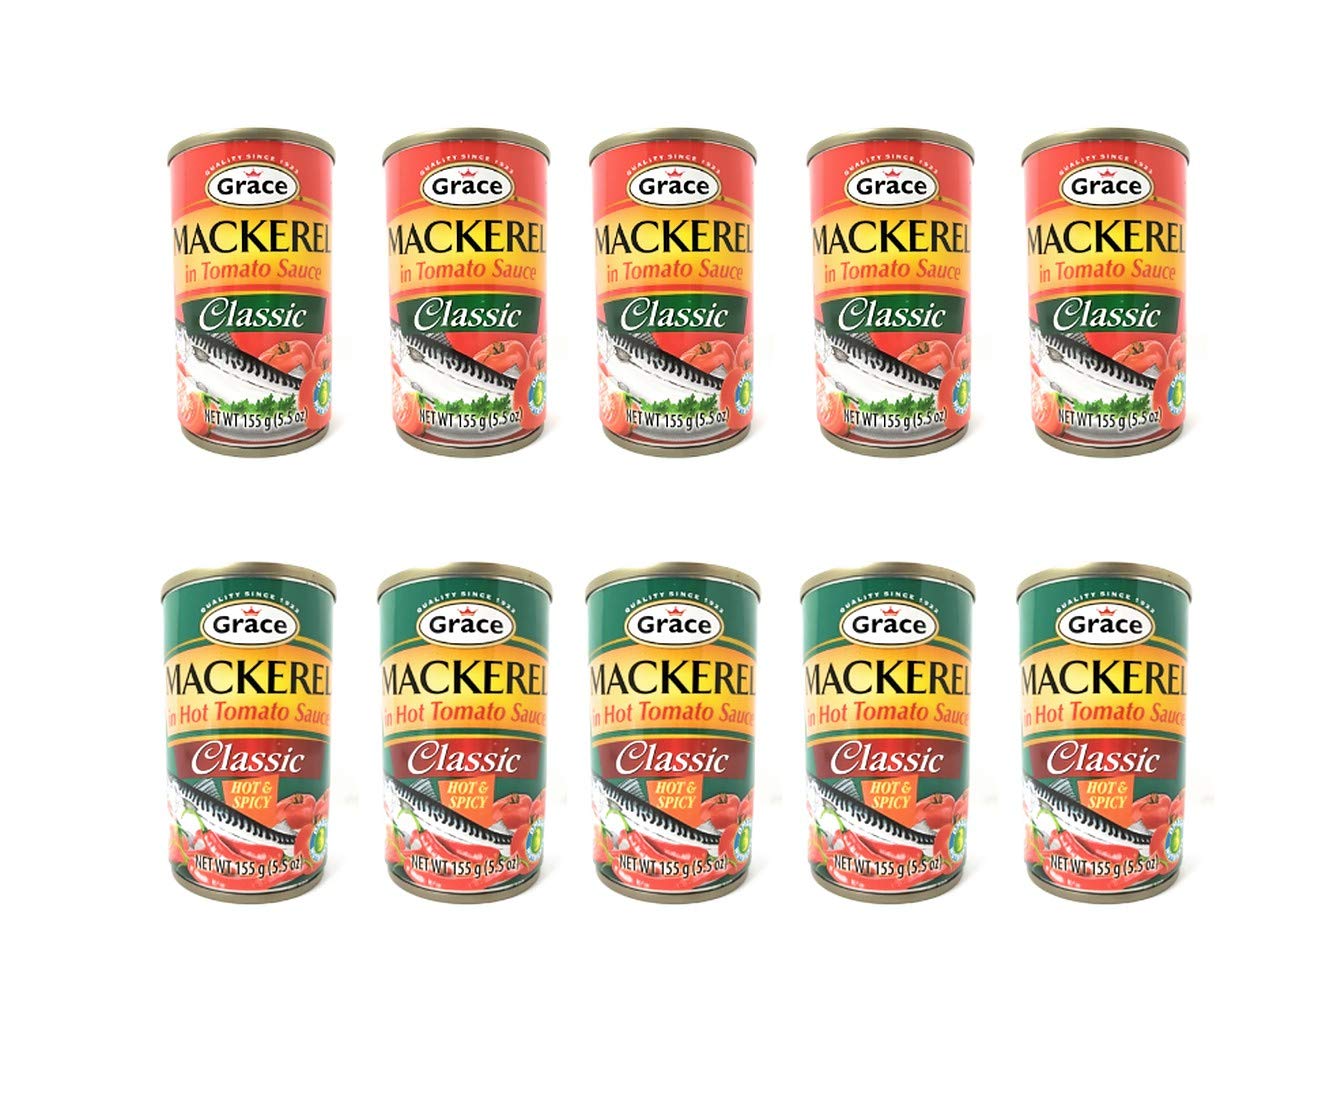 Grace Mackerel in Tomato Sauce 10 Pack (Bundle)